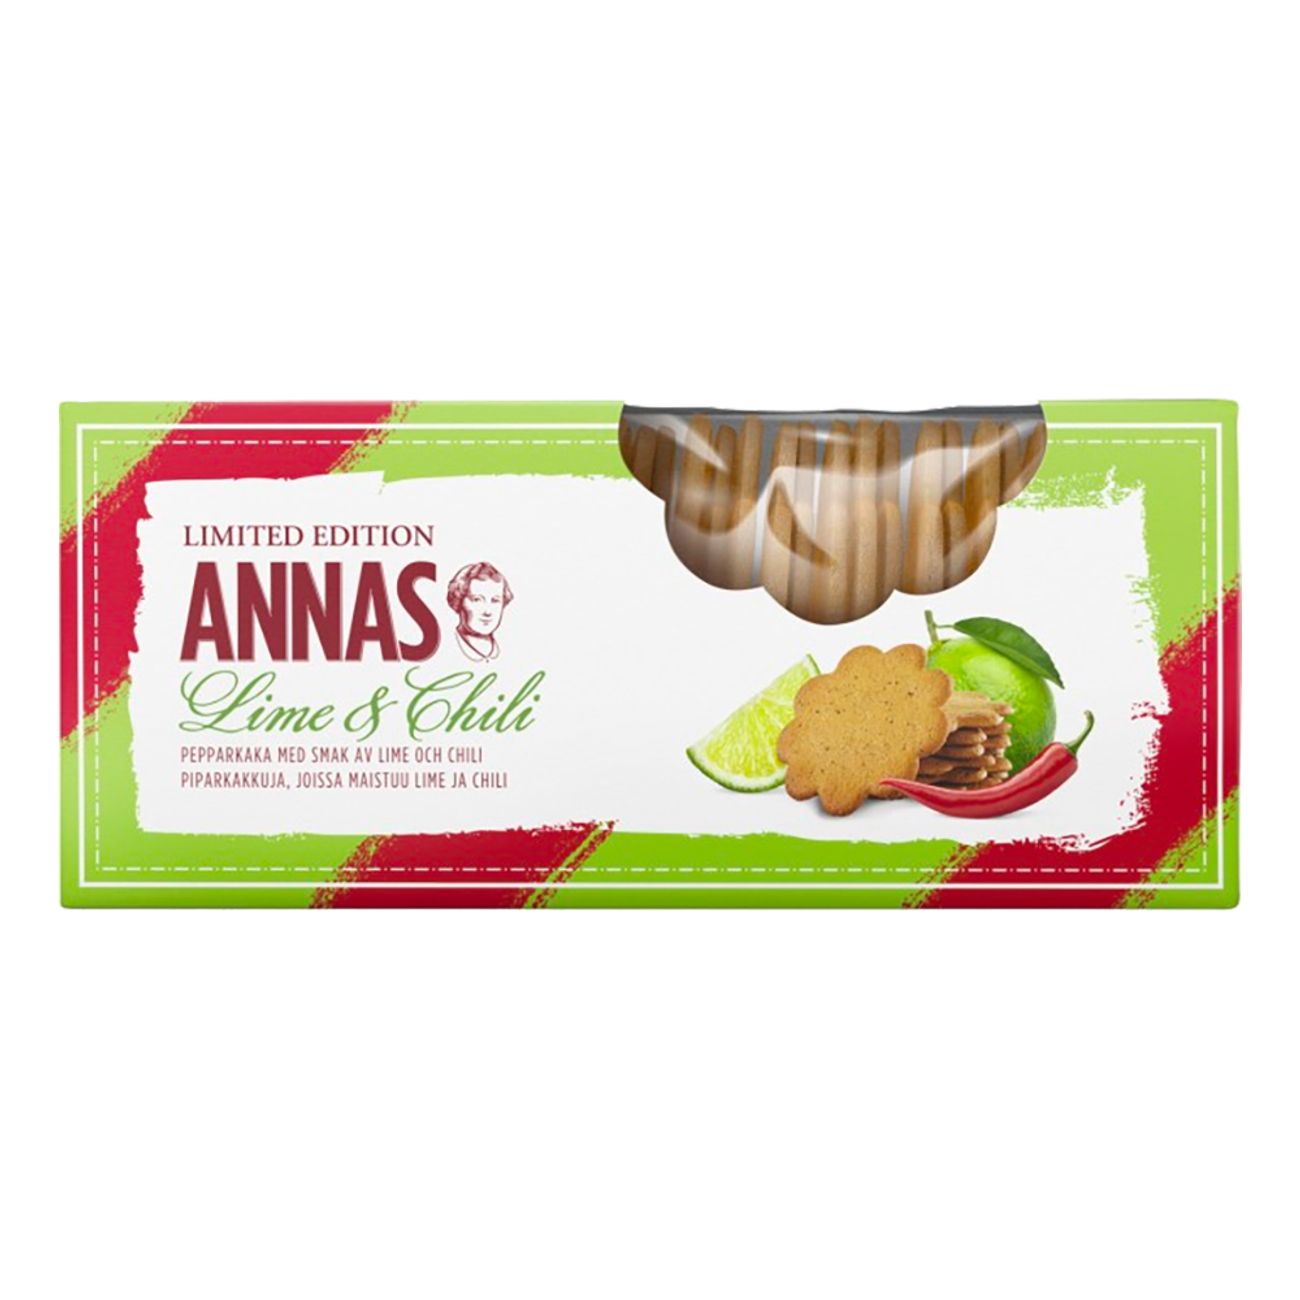 annas-pepparkakor-lime-chili-99789-1